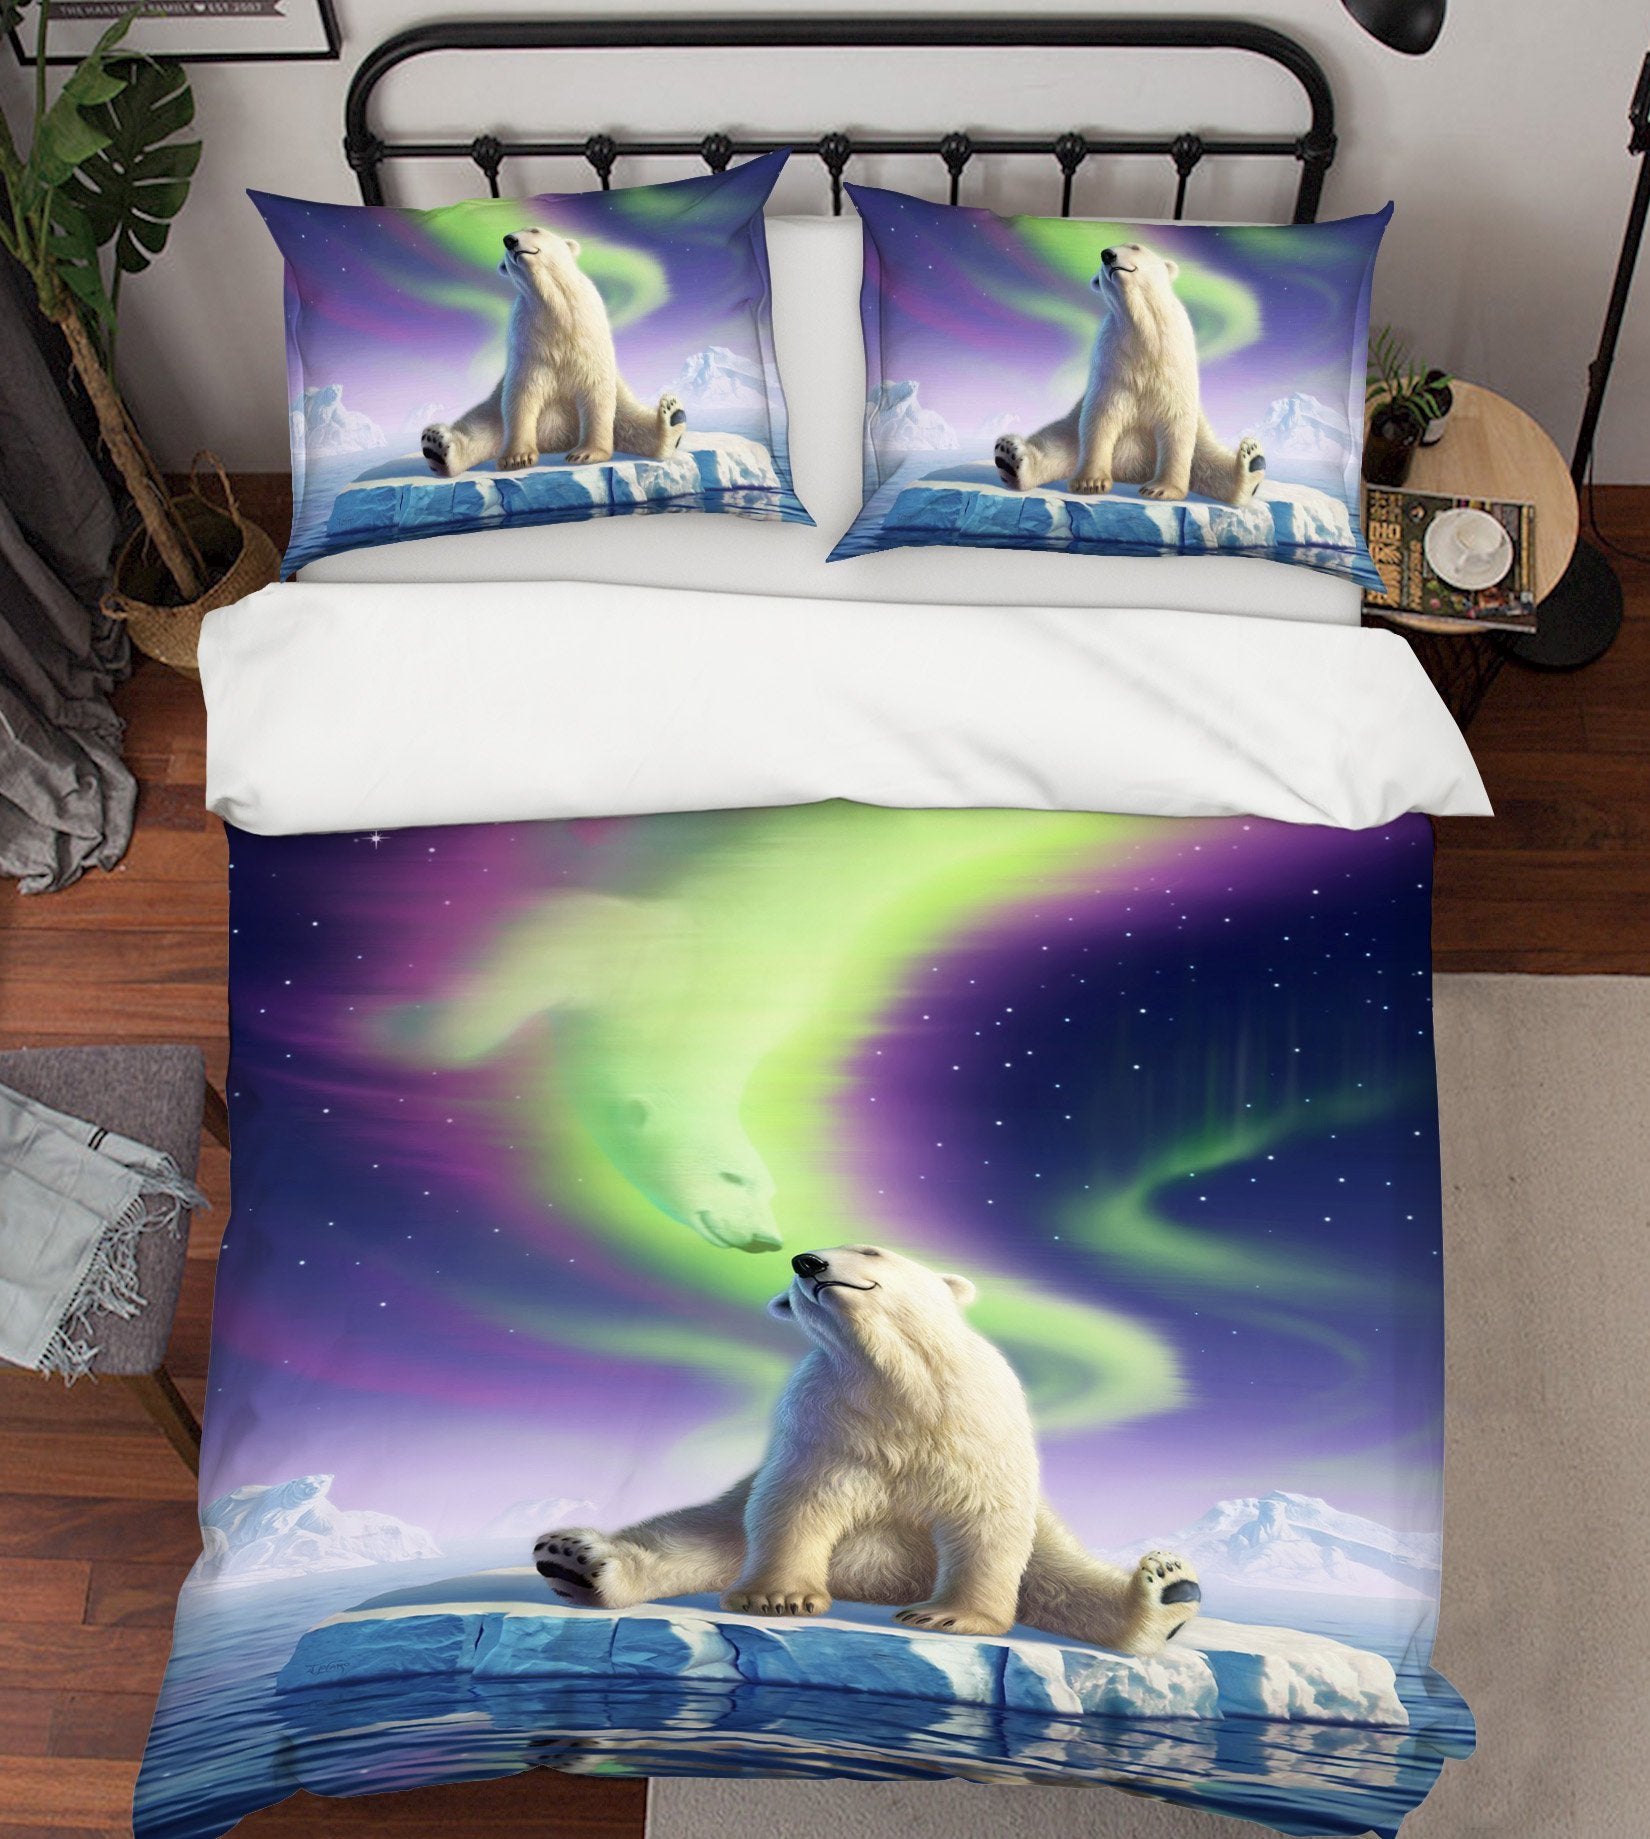 3D Arctic Kiss 2101 Jerry LoFaro bedding Bed Pillowcases Quilt Quiet Covers AJ Creativity Home 